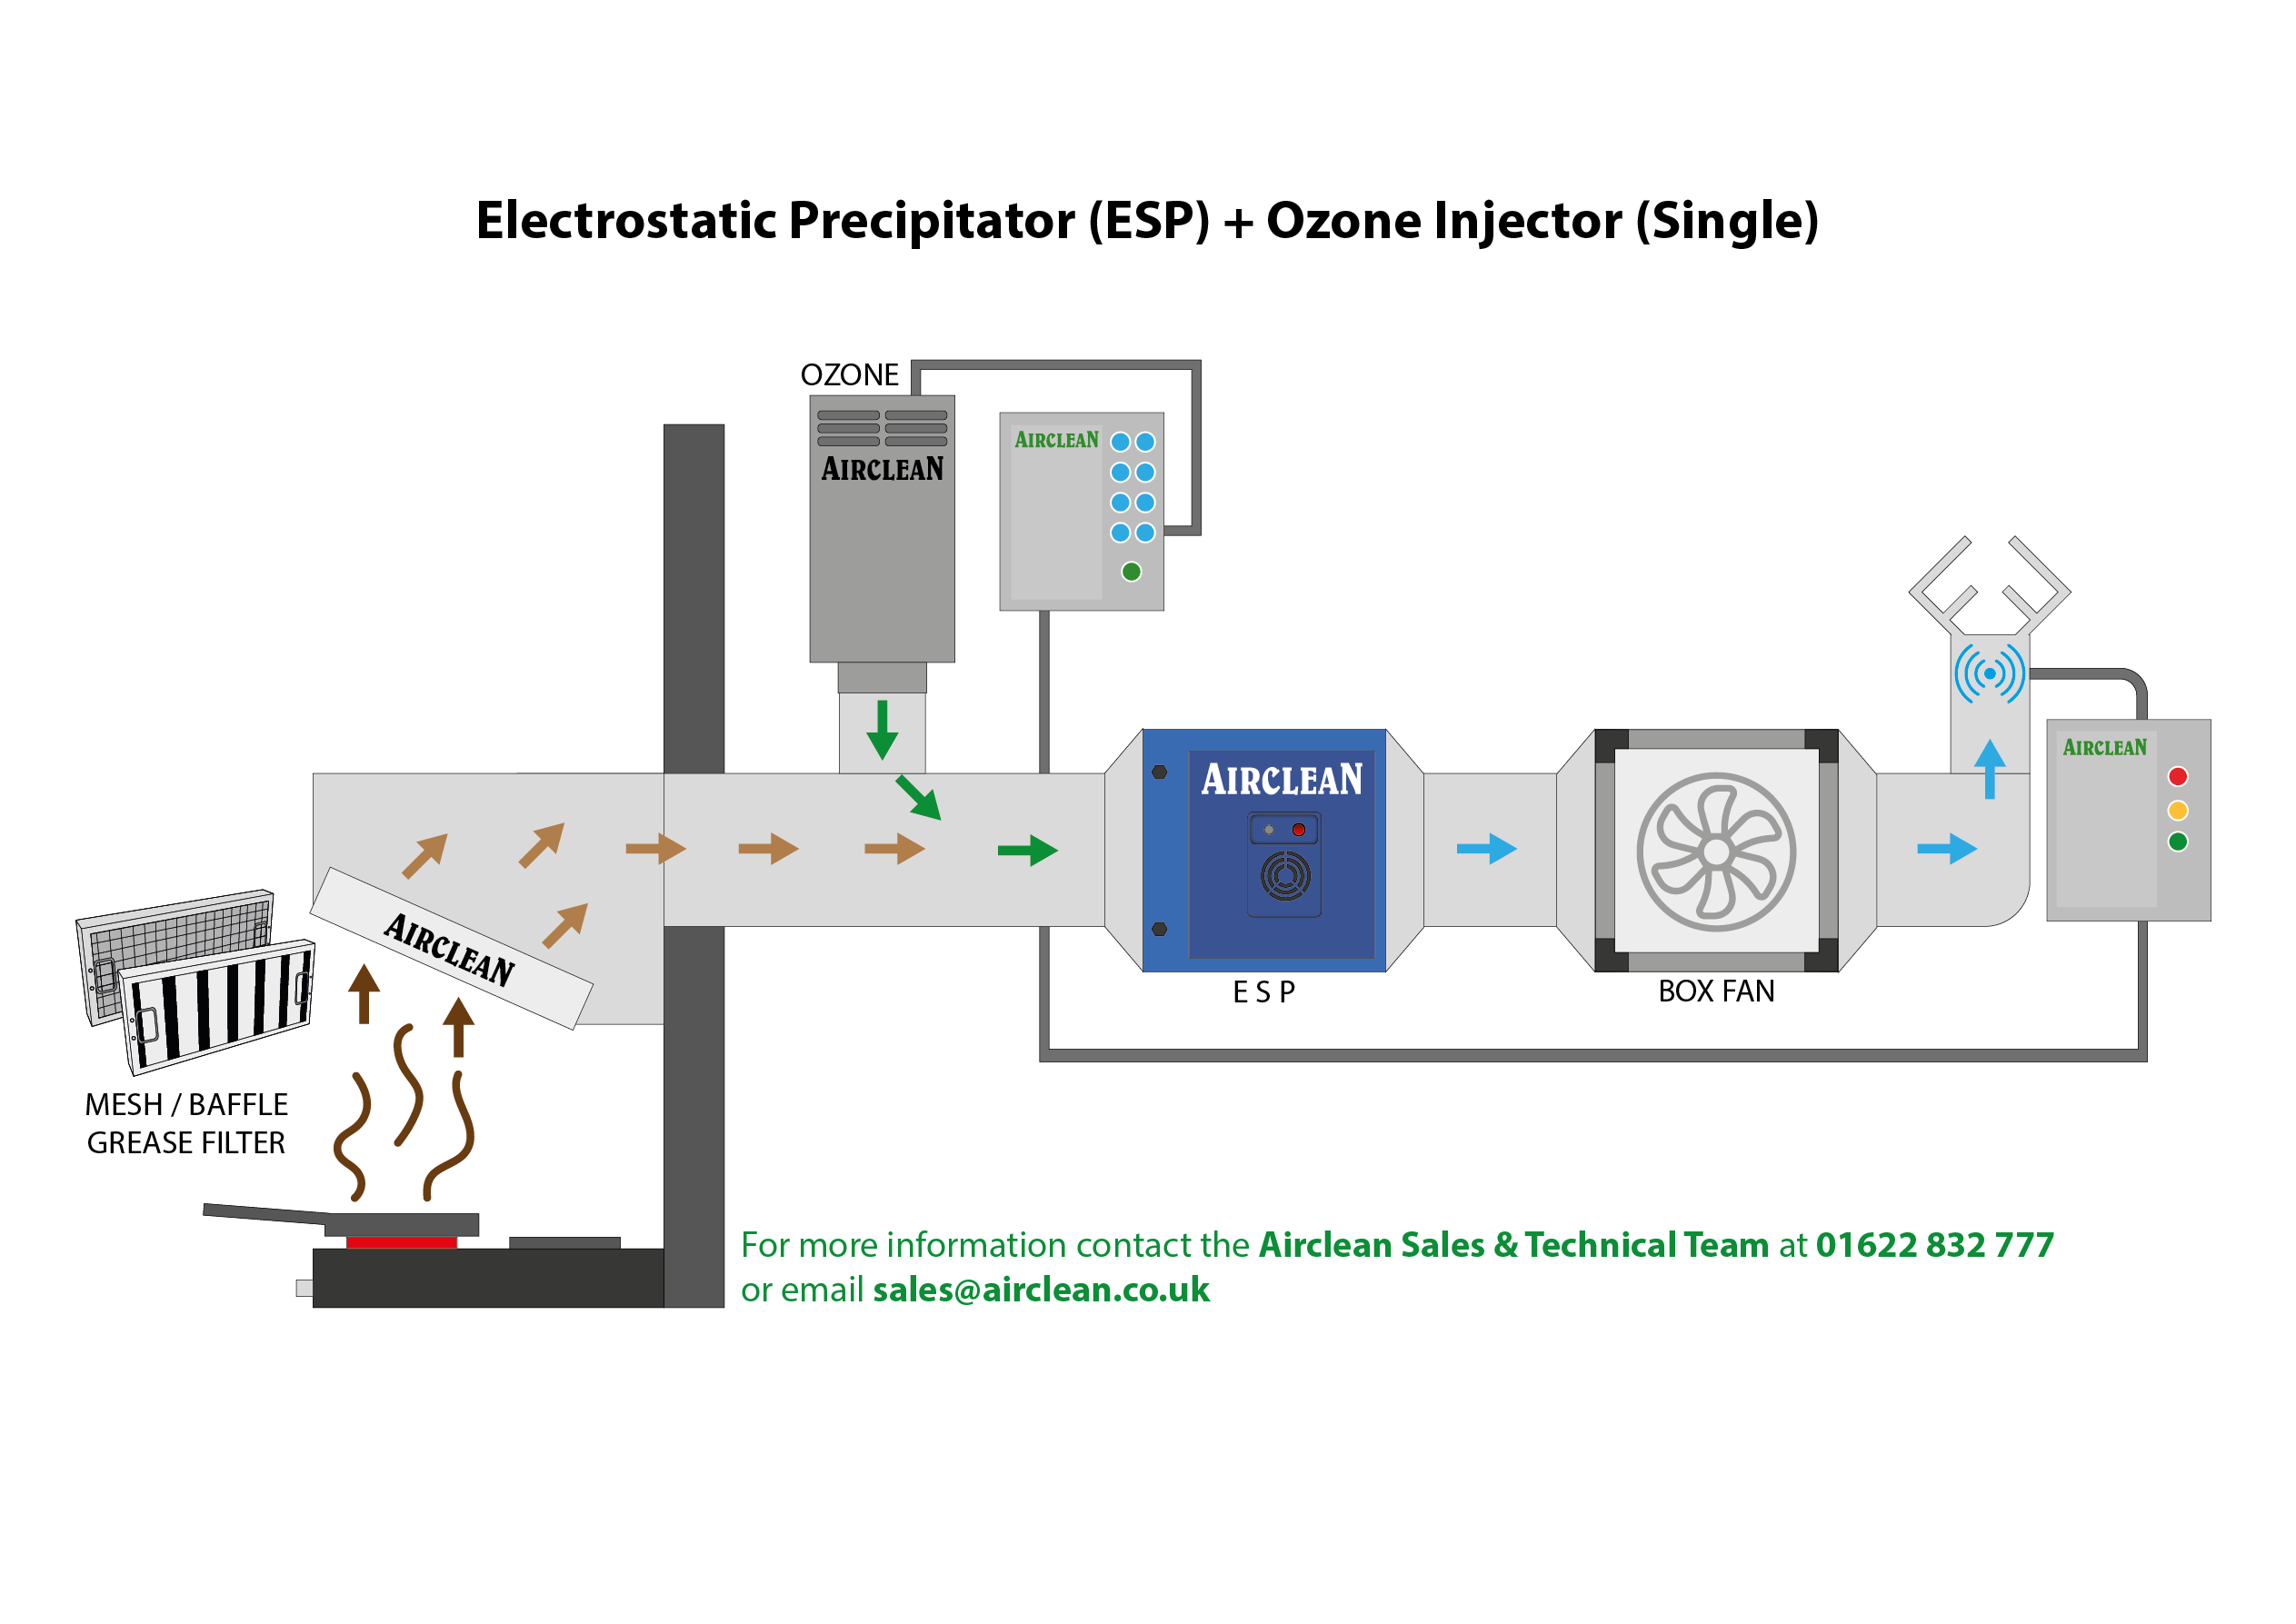 Airclean Electrostatic Precipitator (ESP) + Ozone Injector system diagram